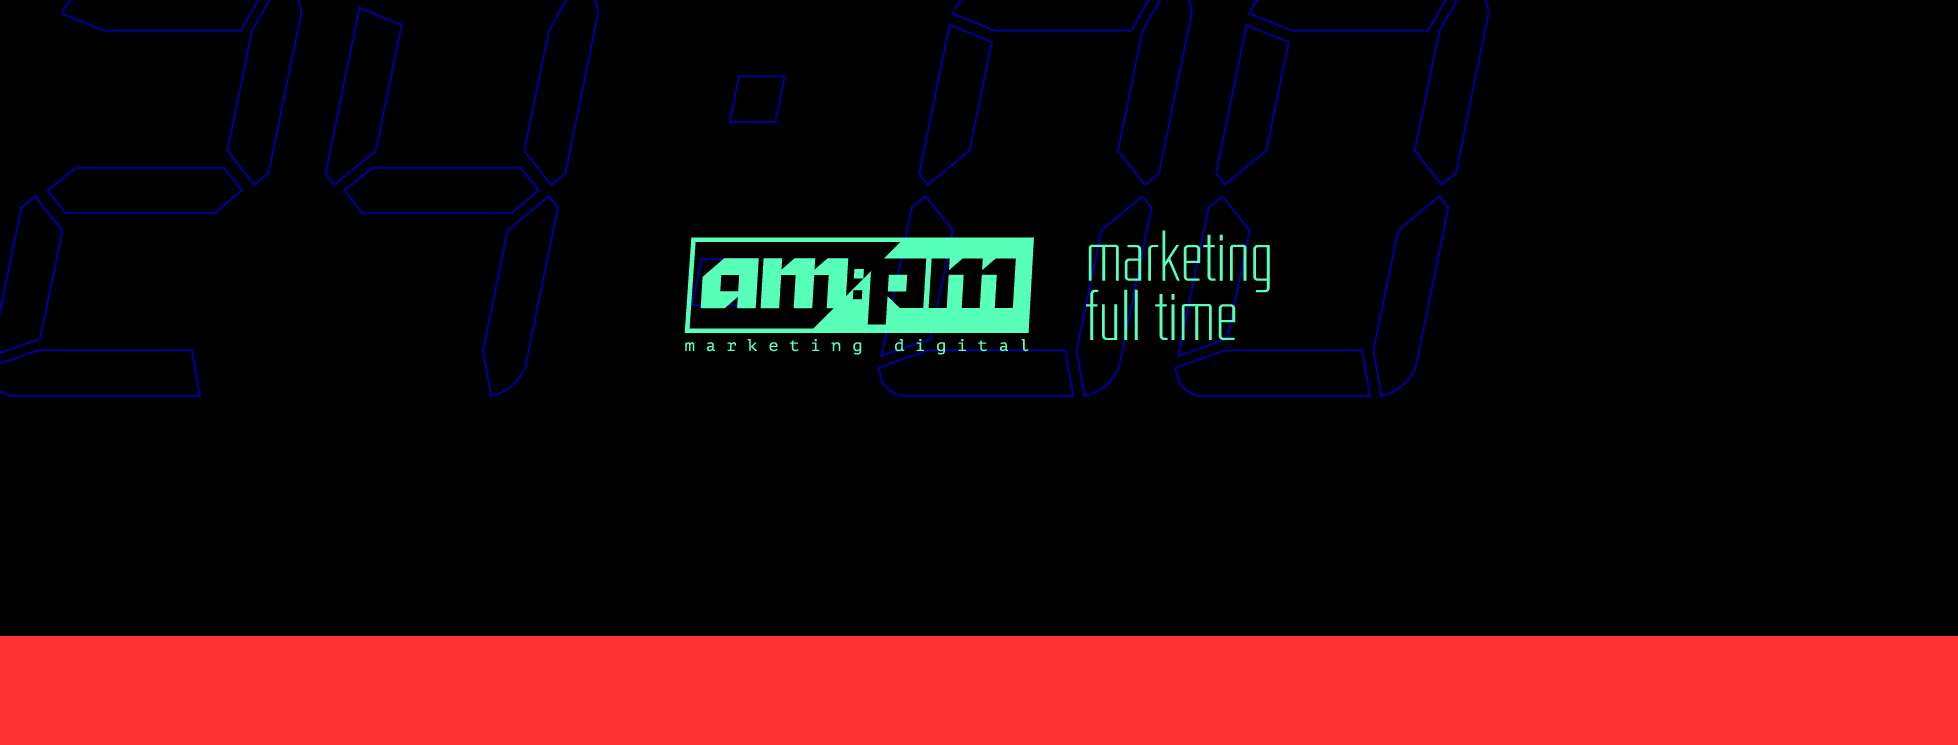 (c) Ampmdigital.com.br